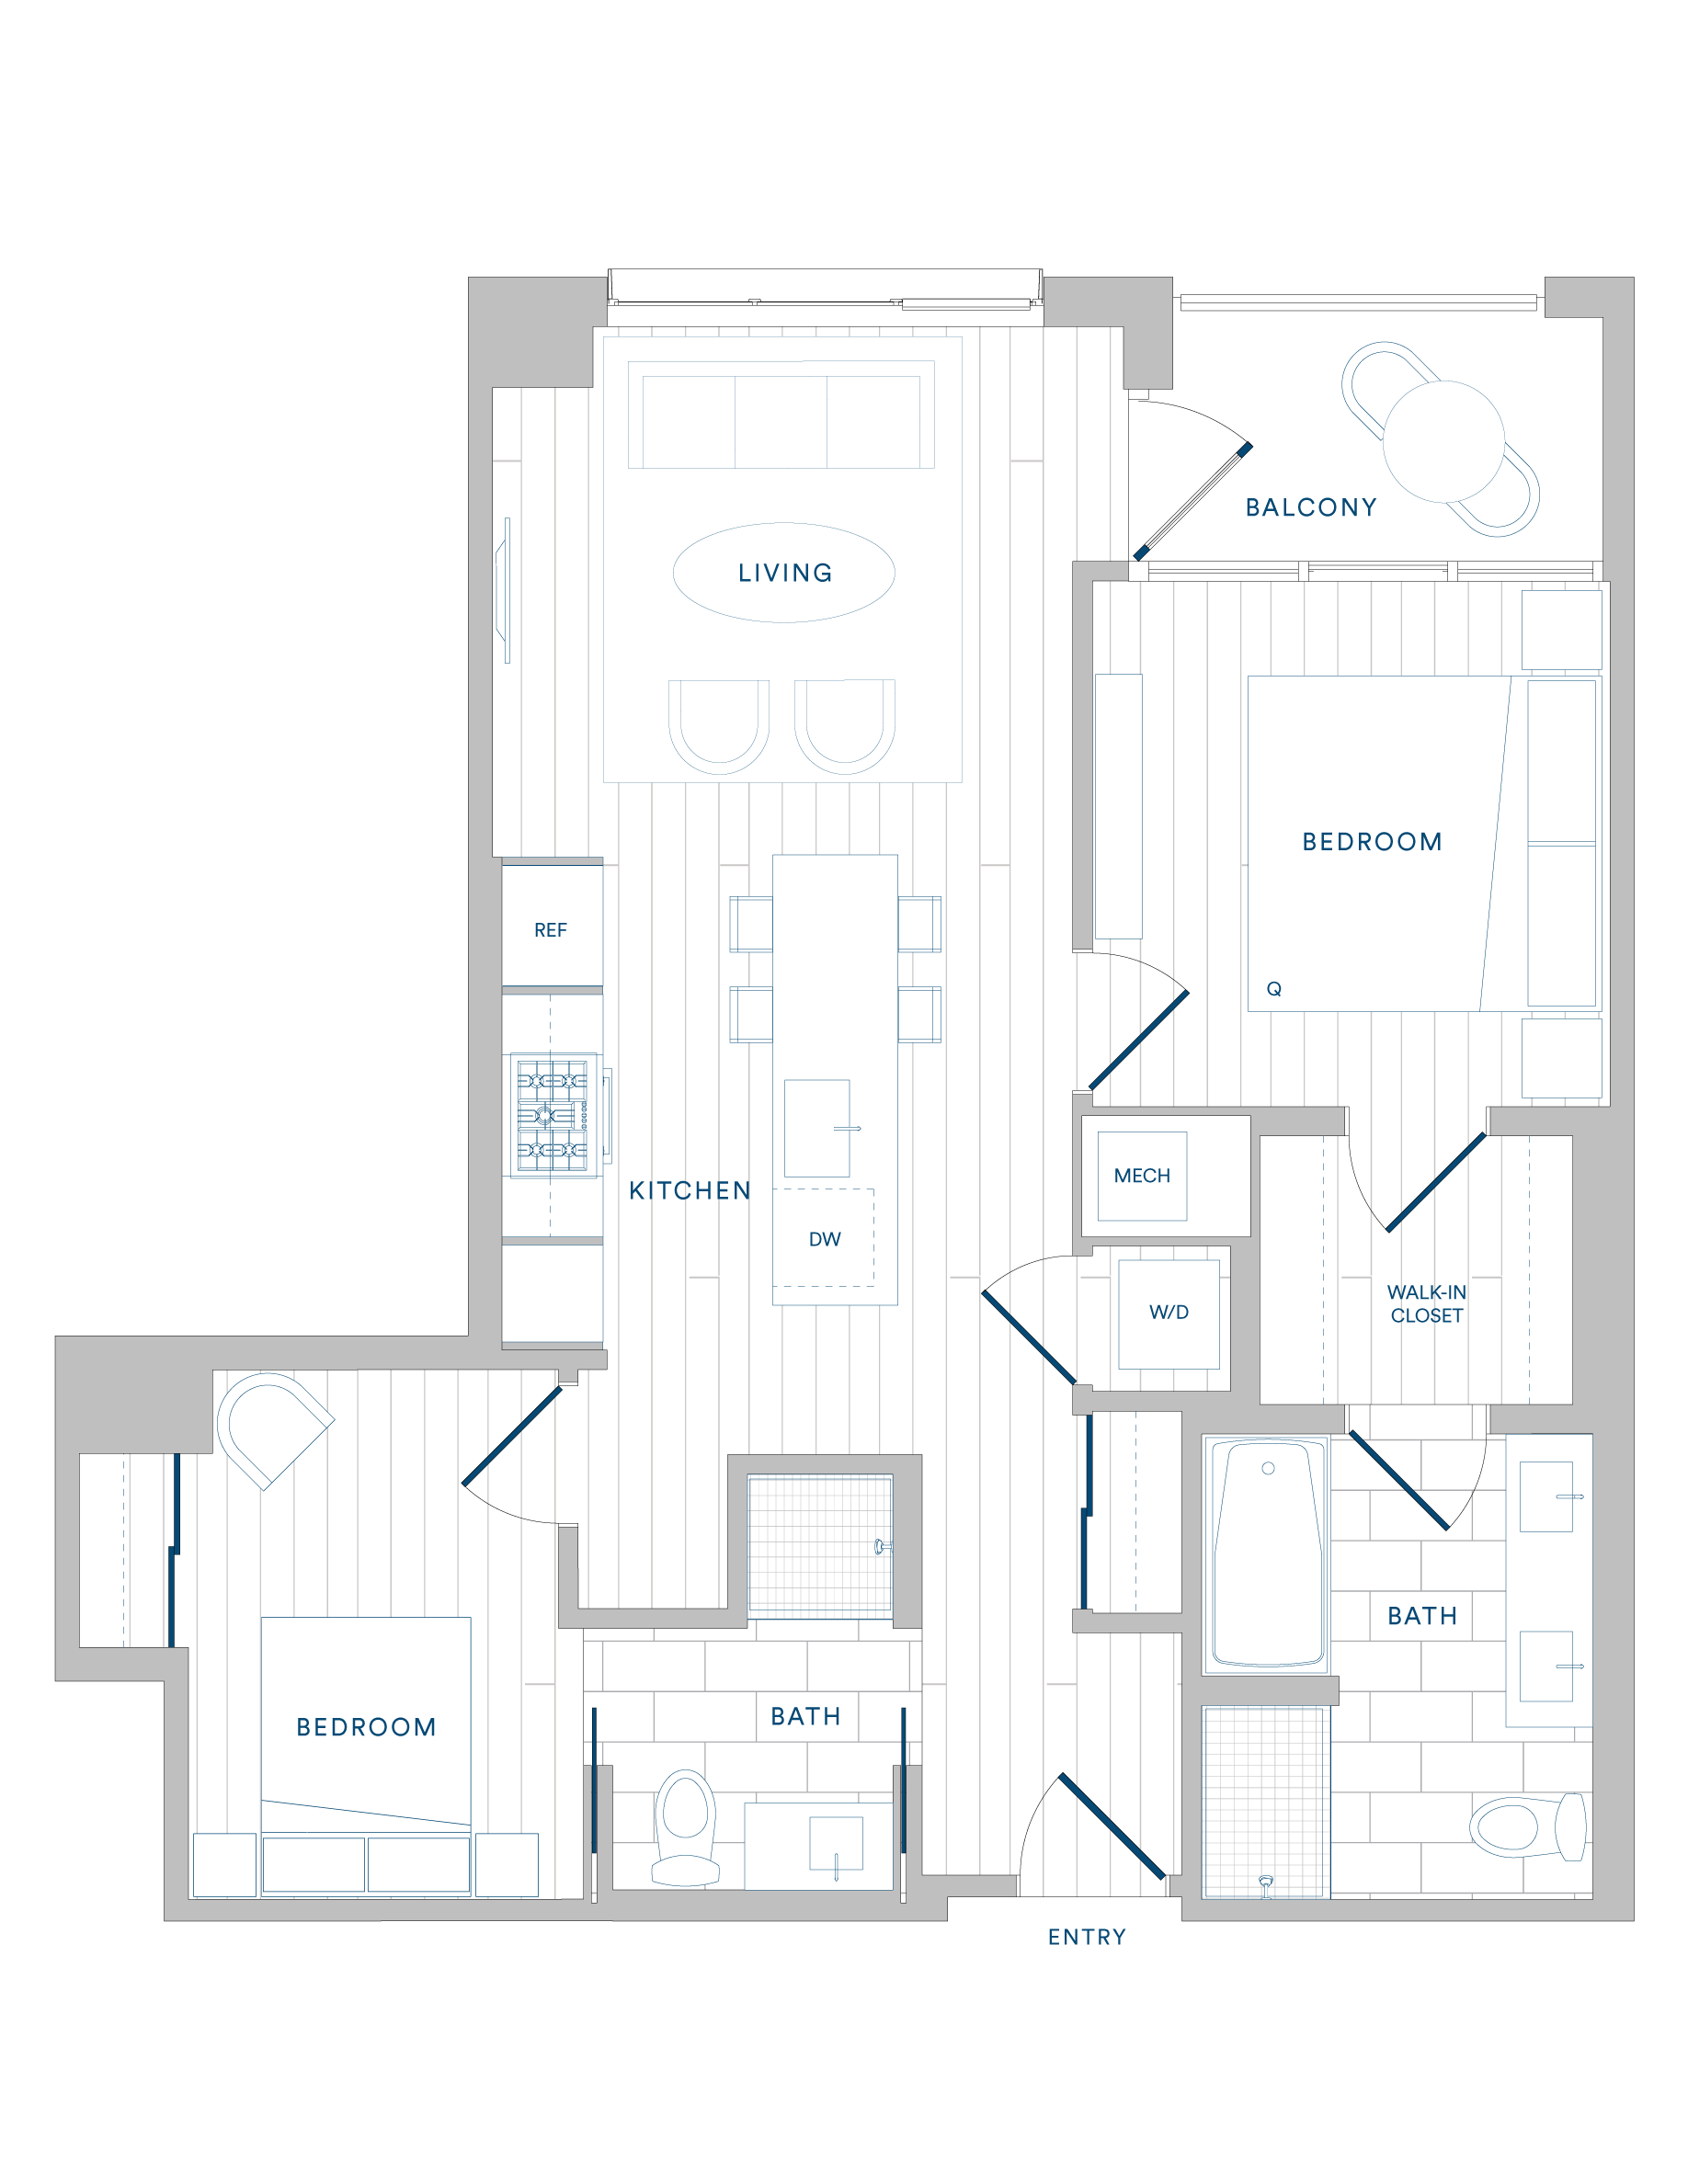 Floorplan for Apartment #610, 2 bedroom unit at Margarite